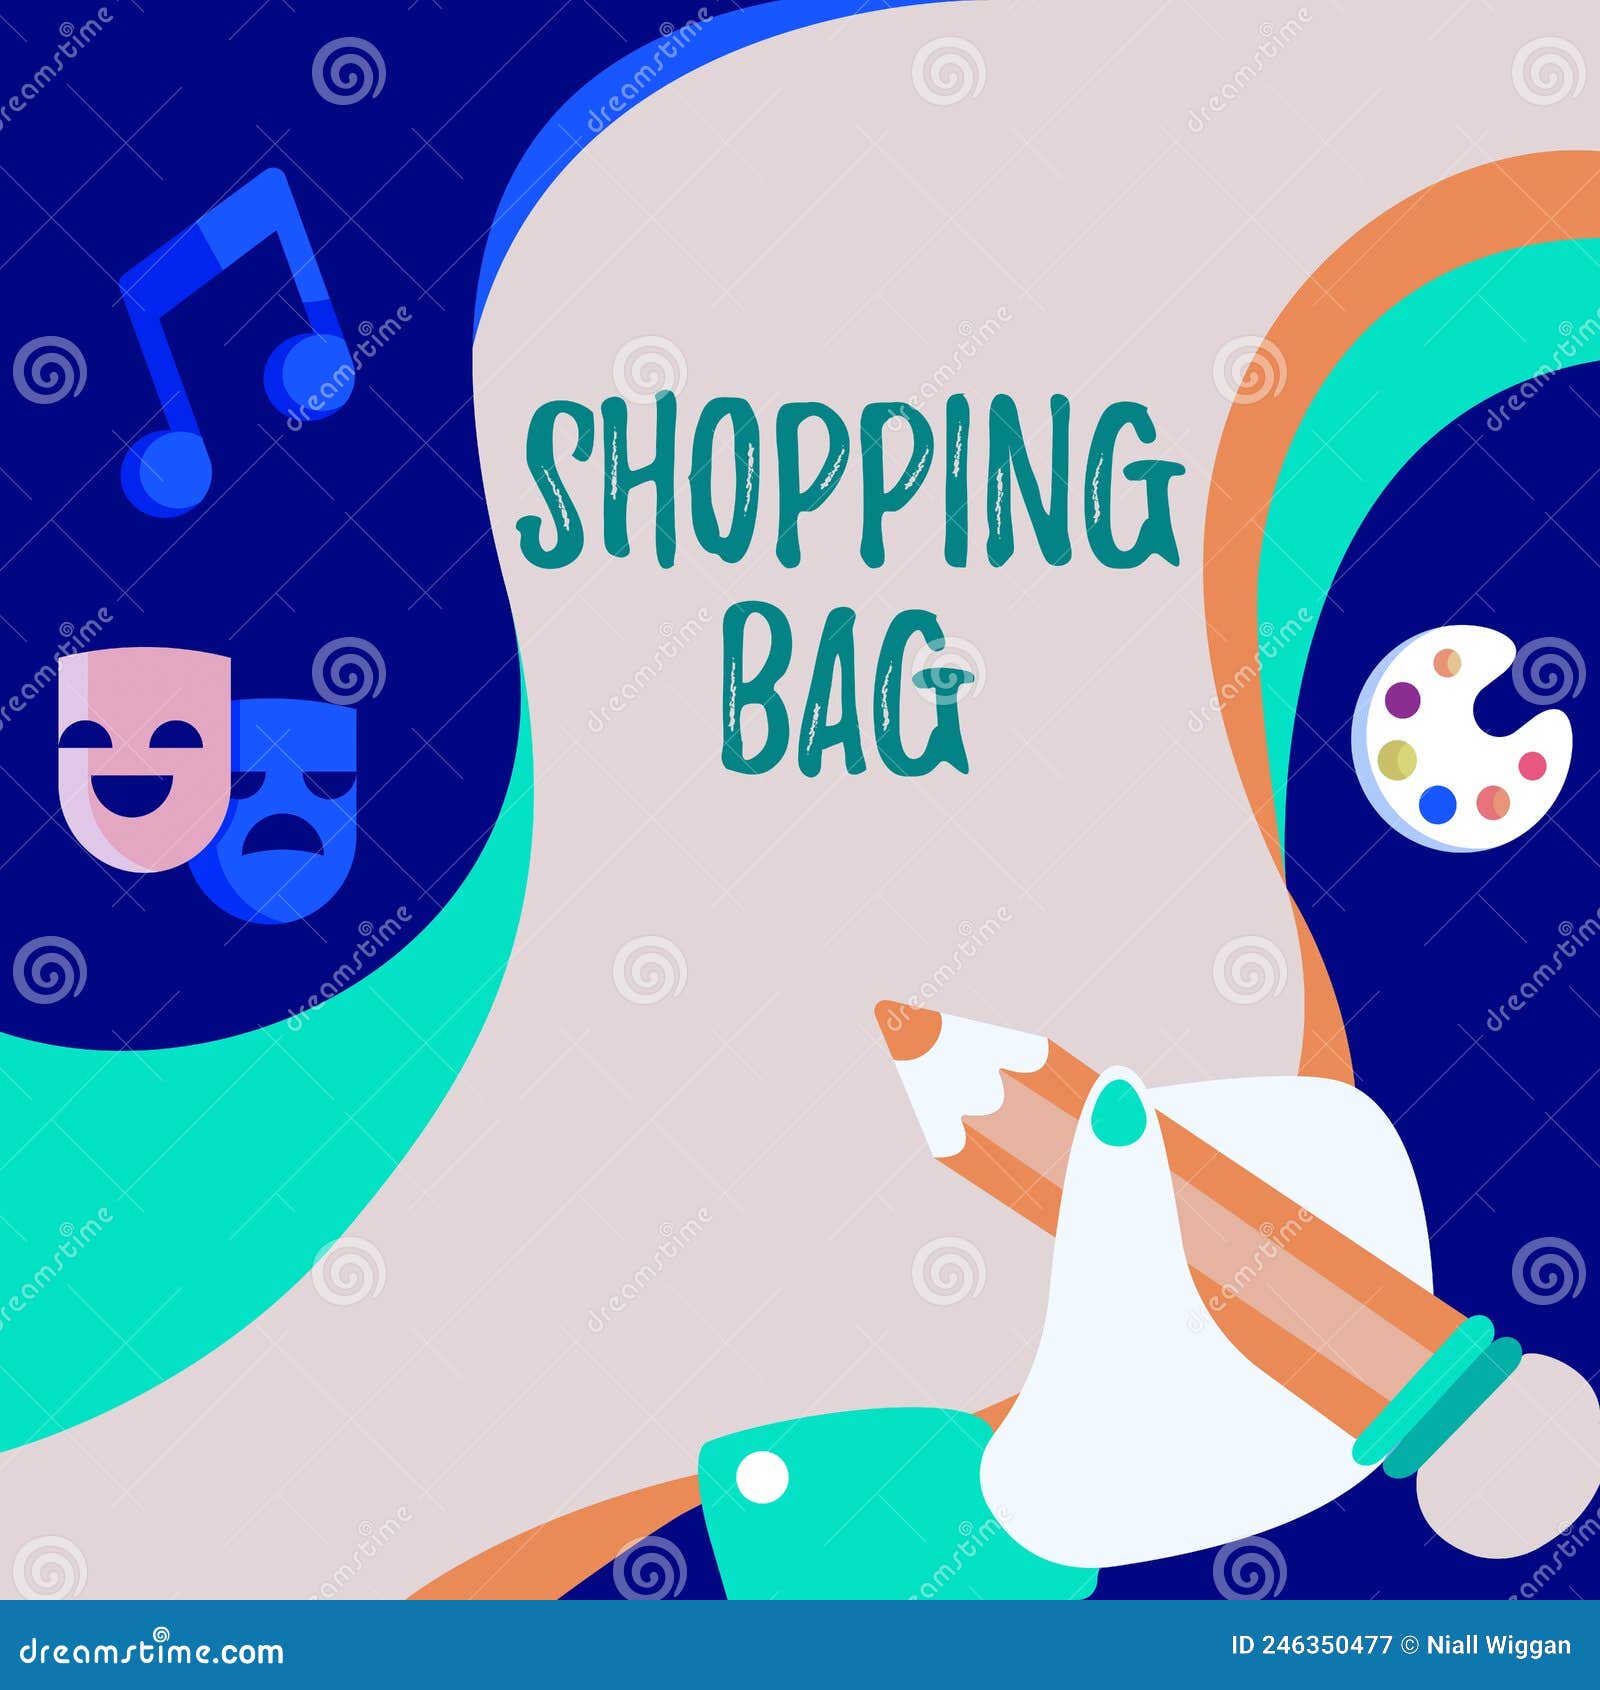 Personal shopper stock illustration. Illustration of purchases